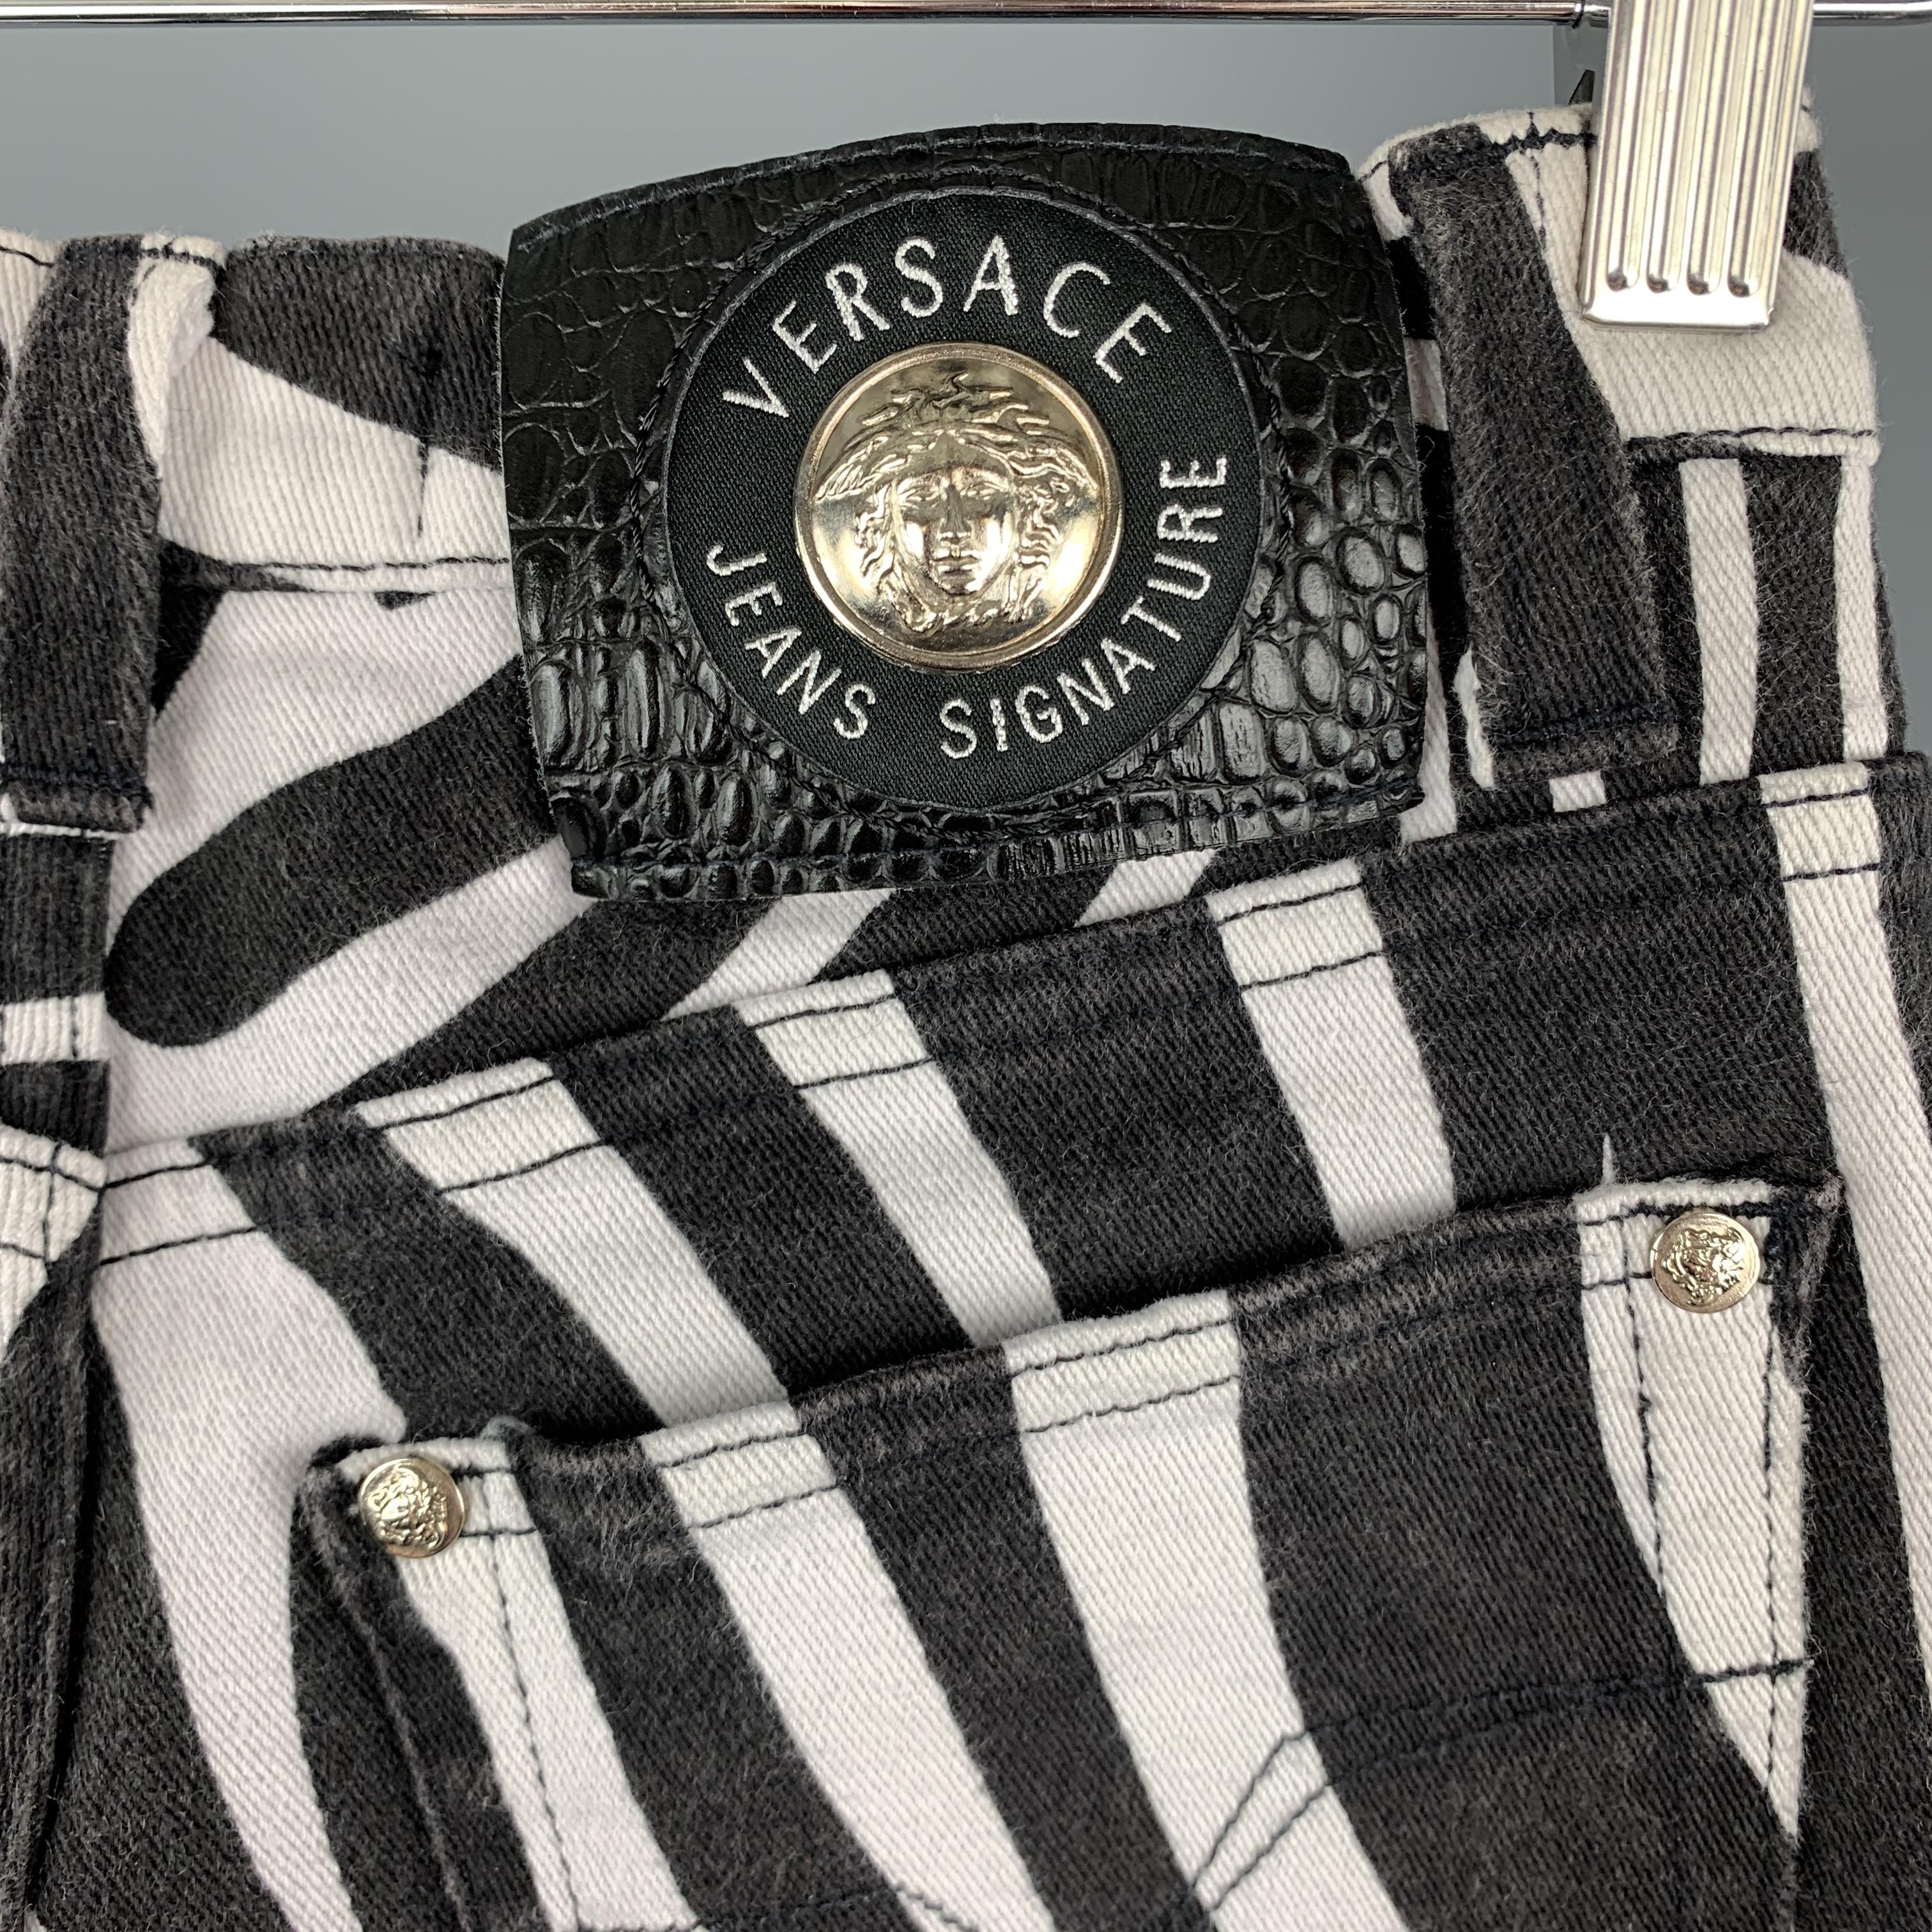 Men's VERSACE JEANS SIGNATURE Size 28 Black & White Zebra Print High Rise Jeans